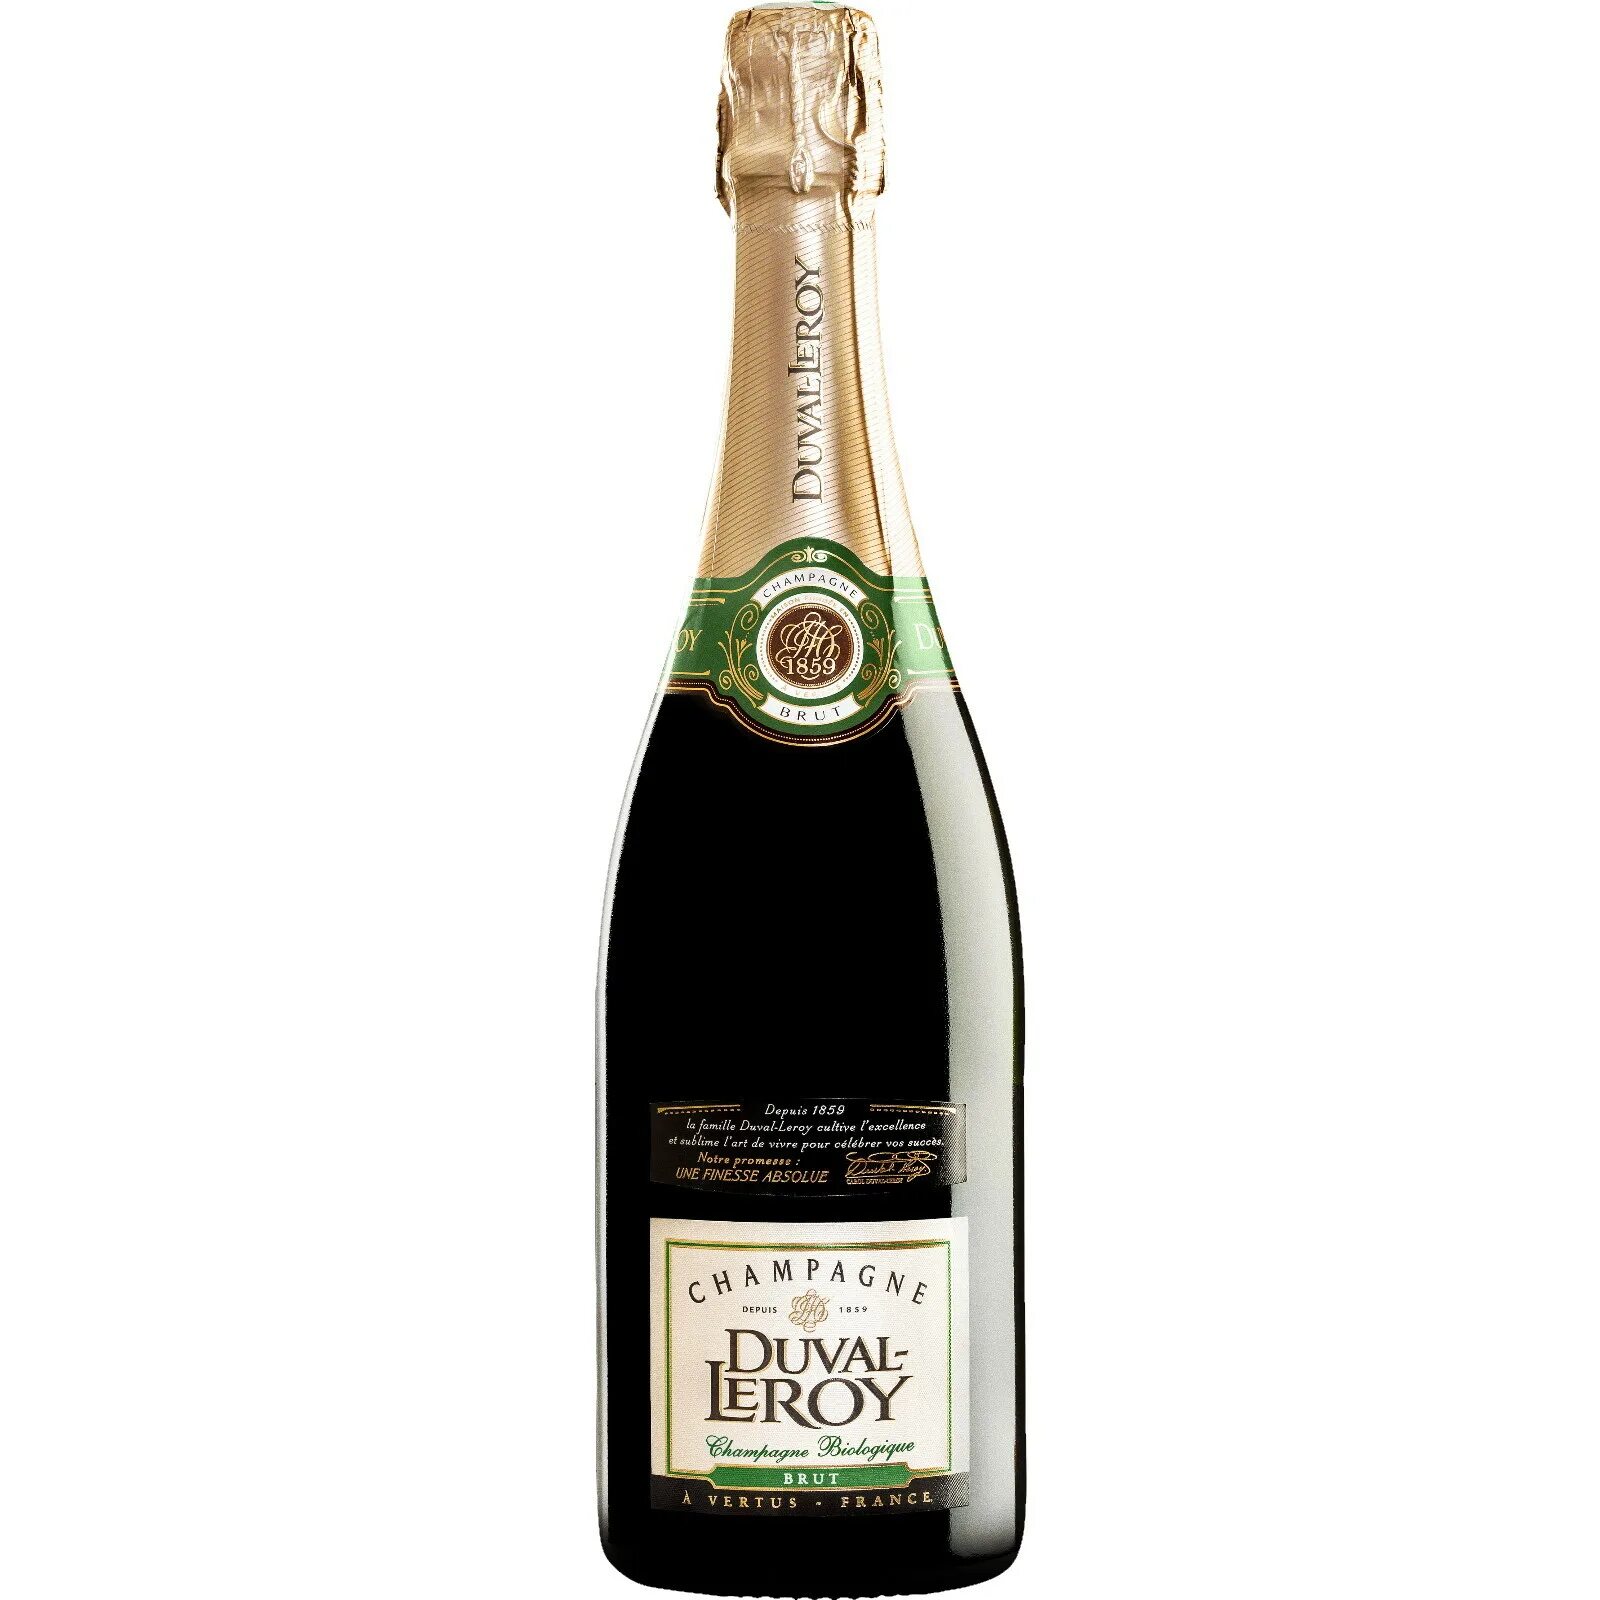 Champagne brut цена. Шампанское Duval-Leroy, Brut 0,75 л. Шампанское дюваль Леруа брют. Шампанское Duval-Leroy Demi-sec 0.75 л. Дюваль Леруа шампанское.